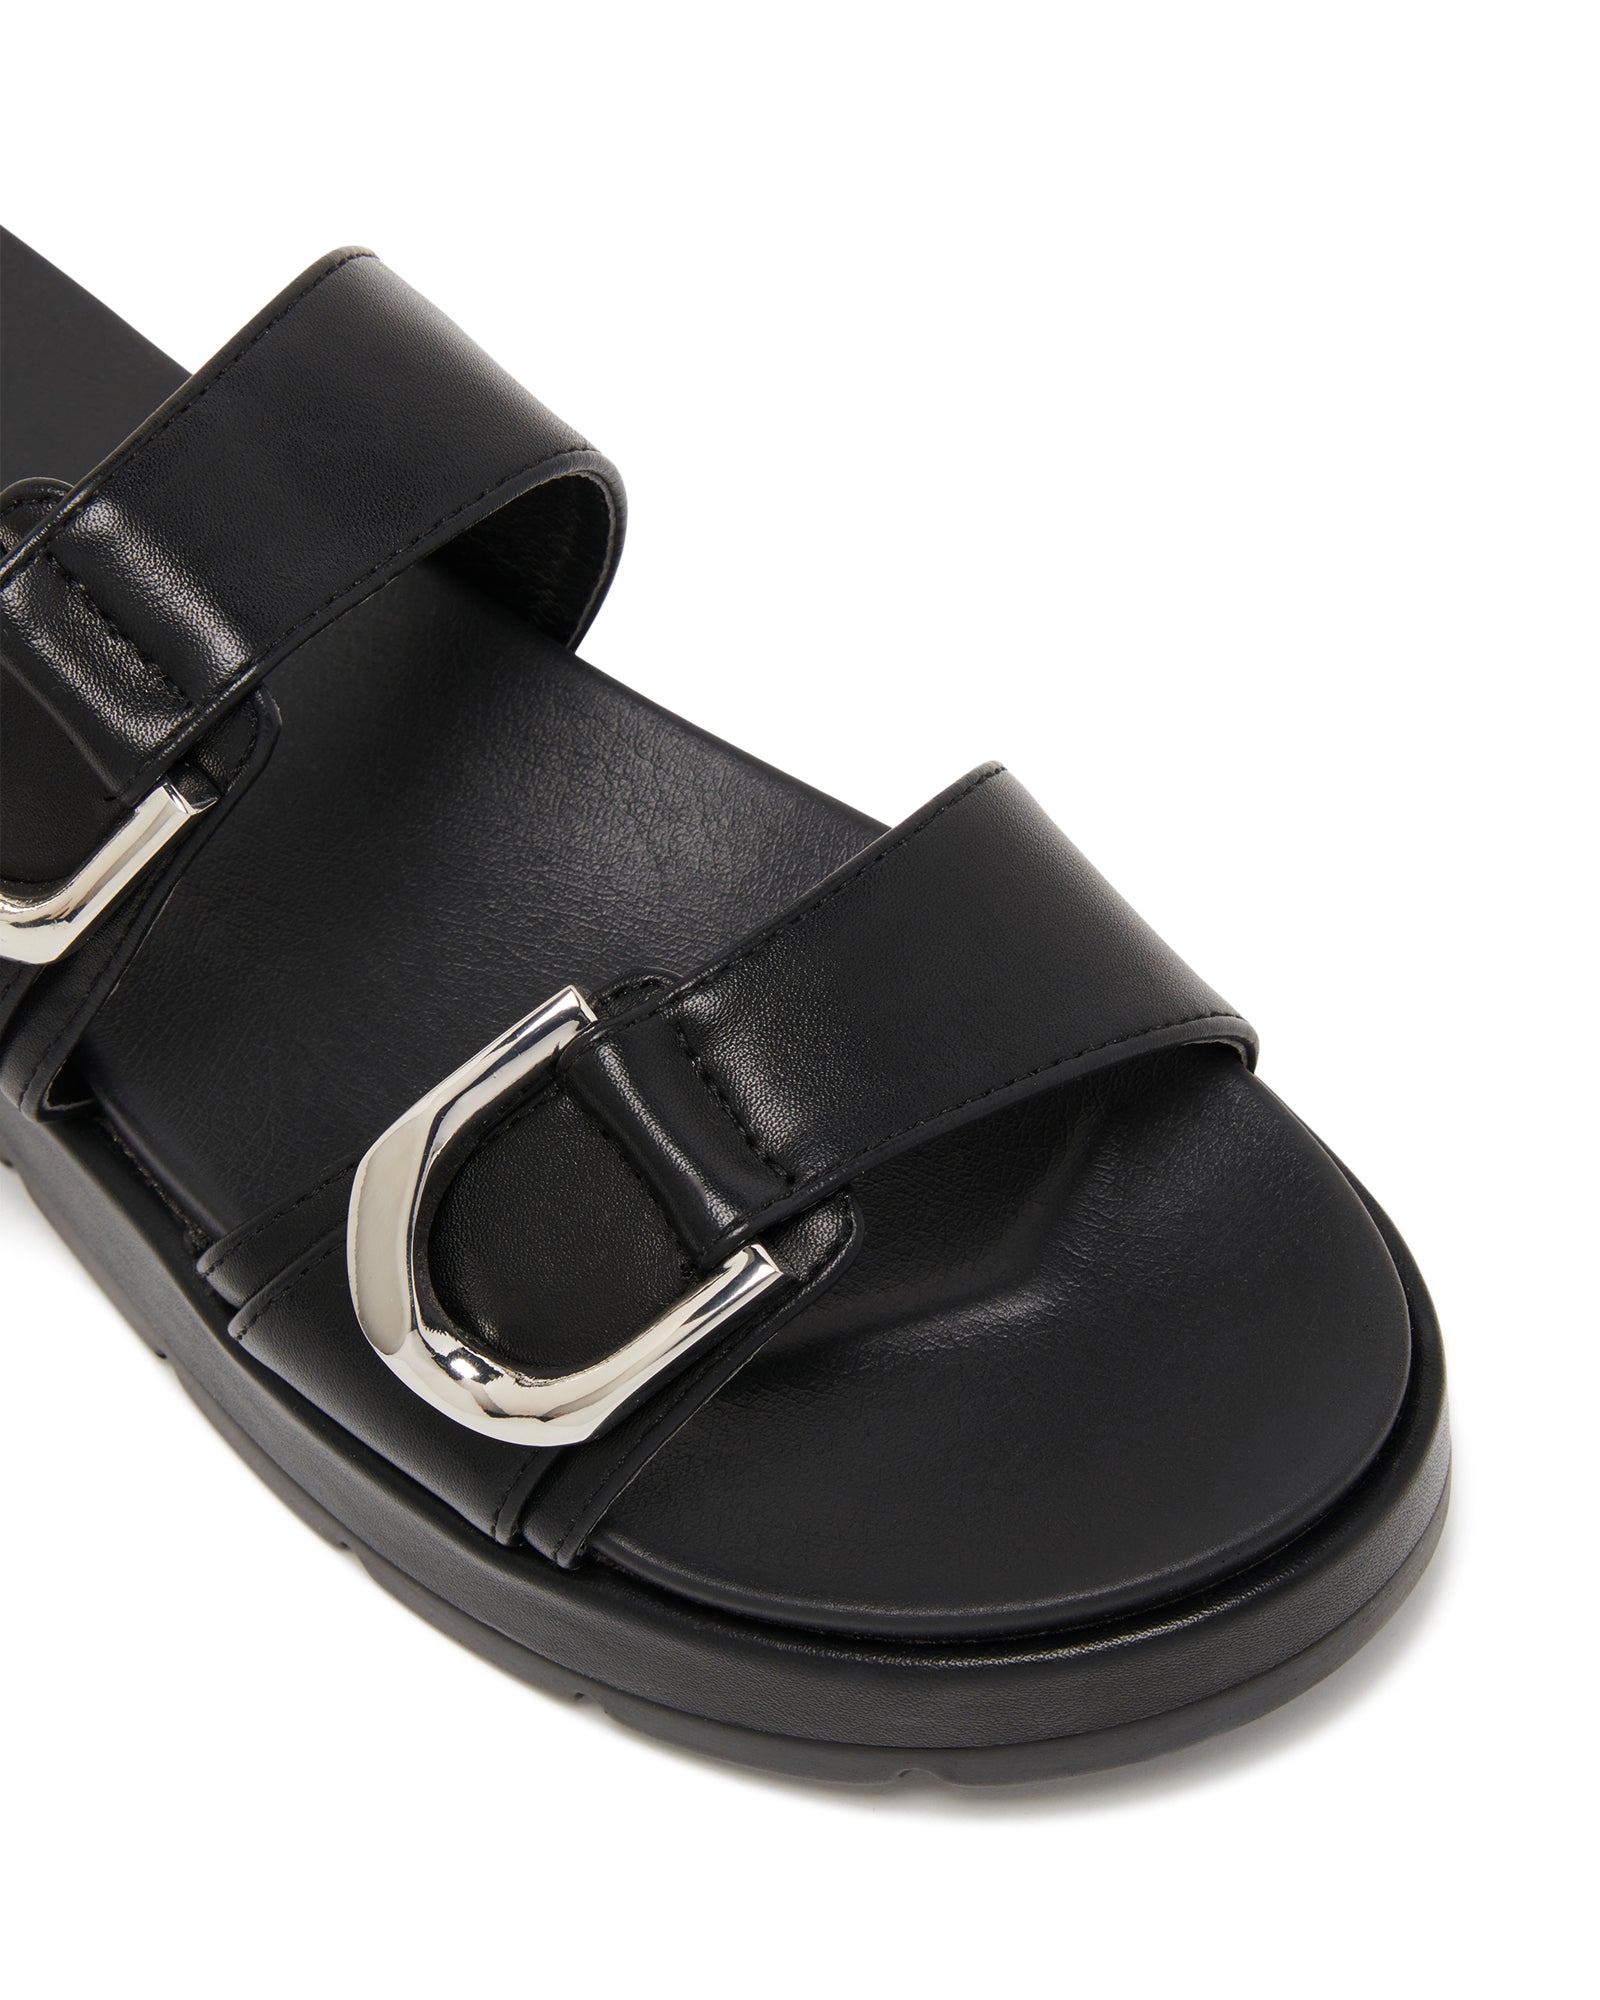 Therapy Shoes Link Black Smooth | Women's Sandals | Slides | Platform